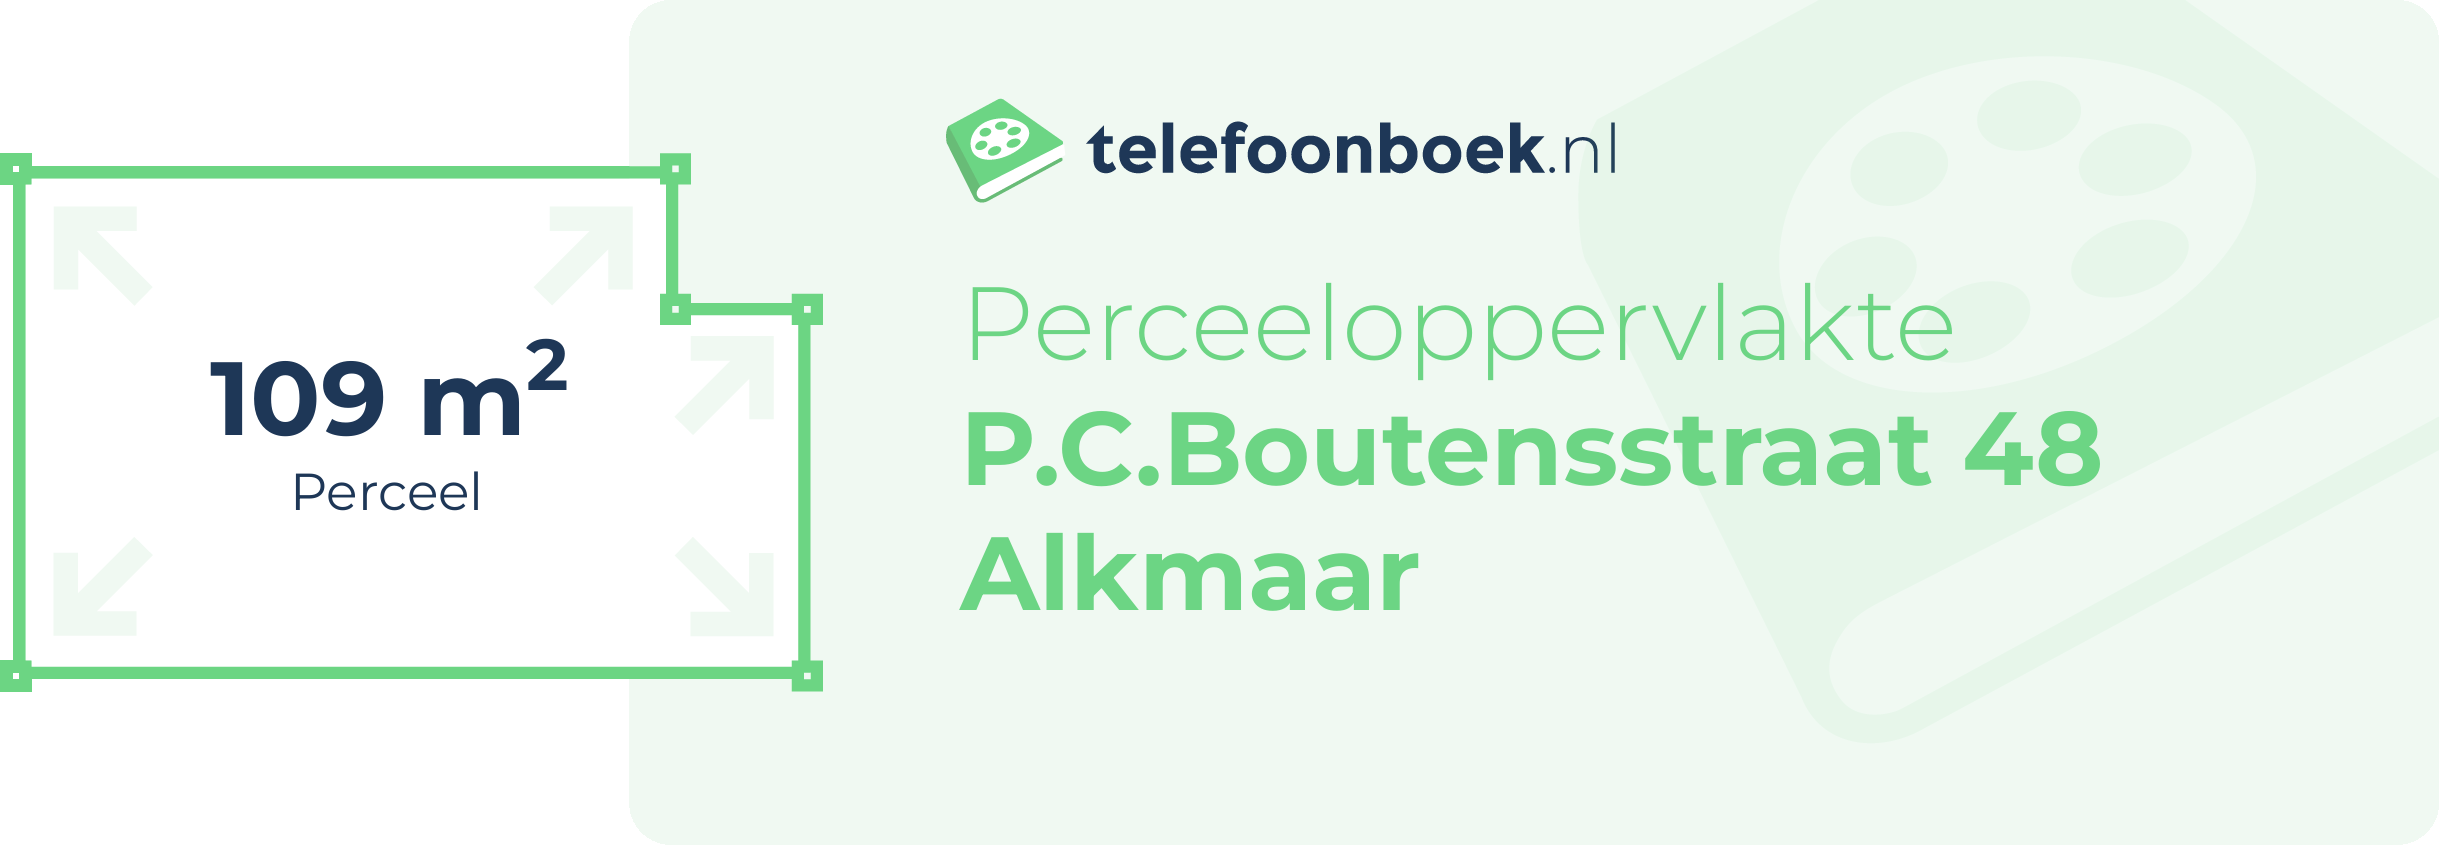 Perceeloppervlakte P.C.Boutensstraat 48 Alkmaar